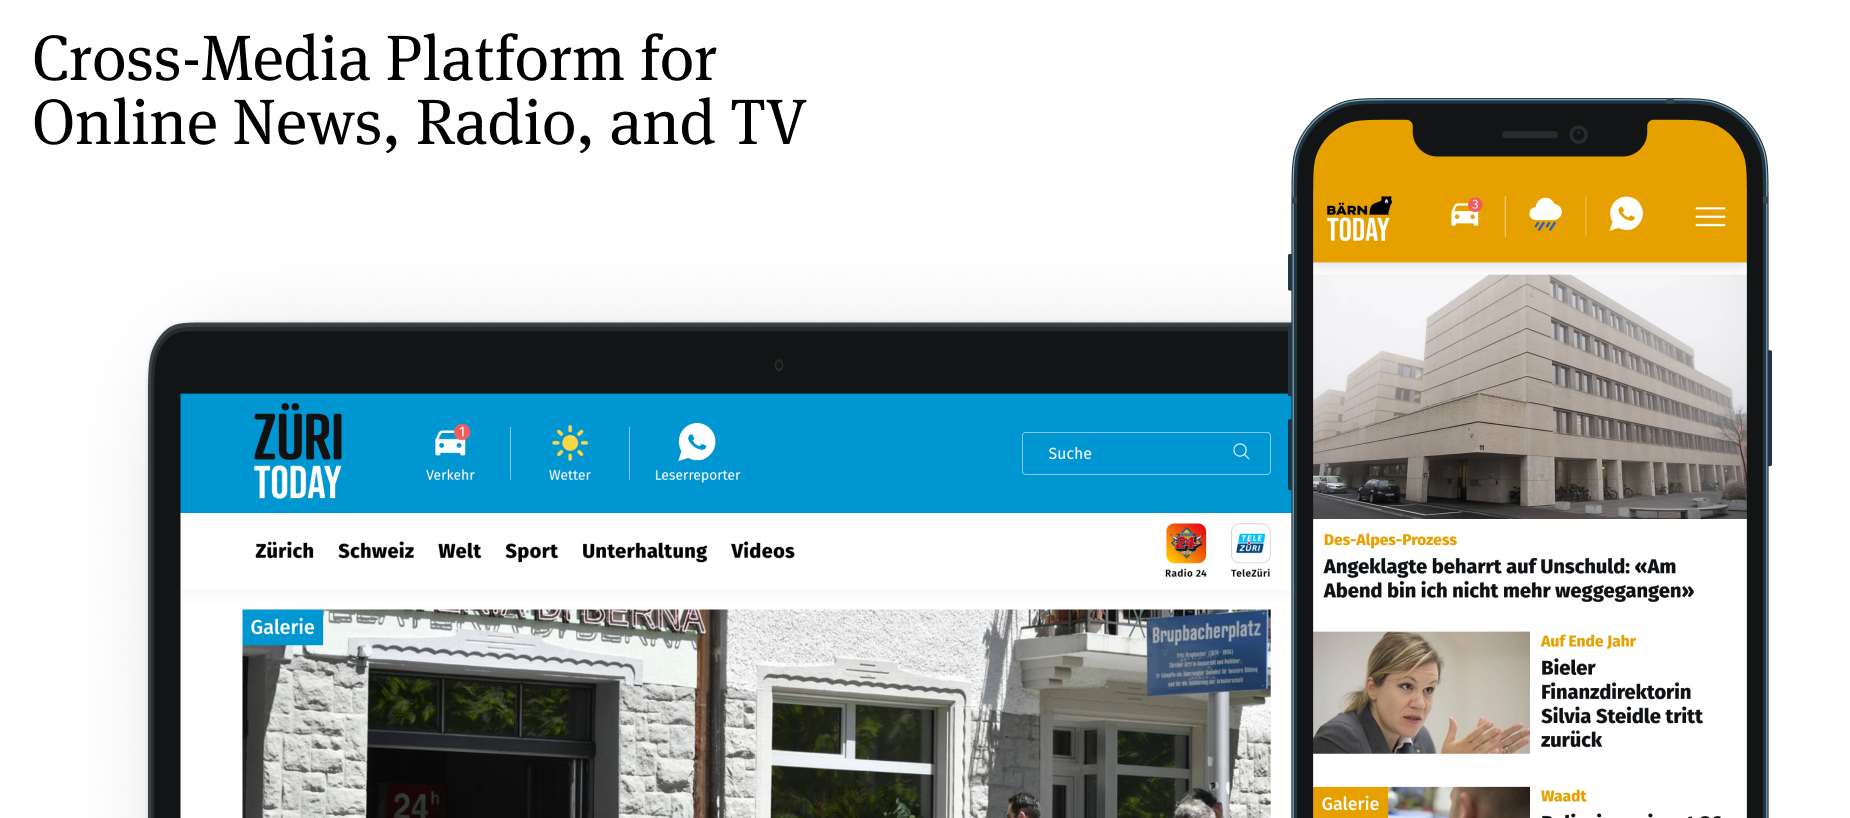 Cross-Media Platform for Online News, Radio, and TV